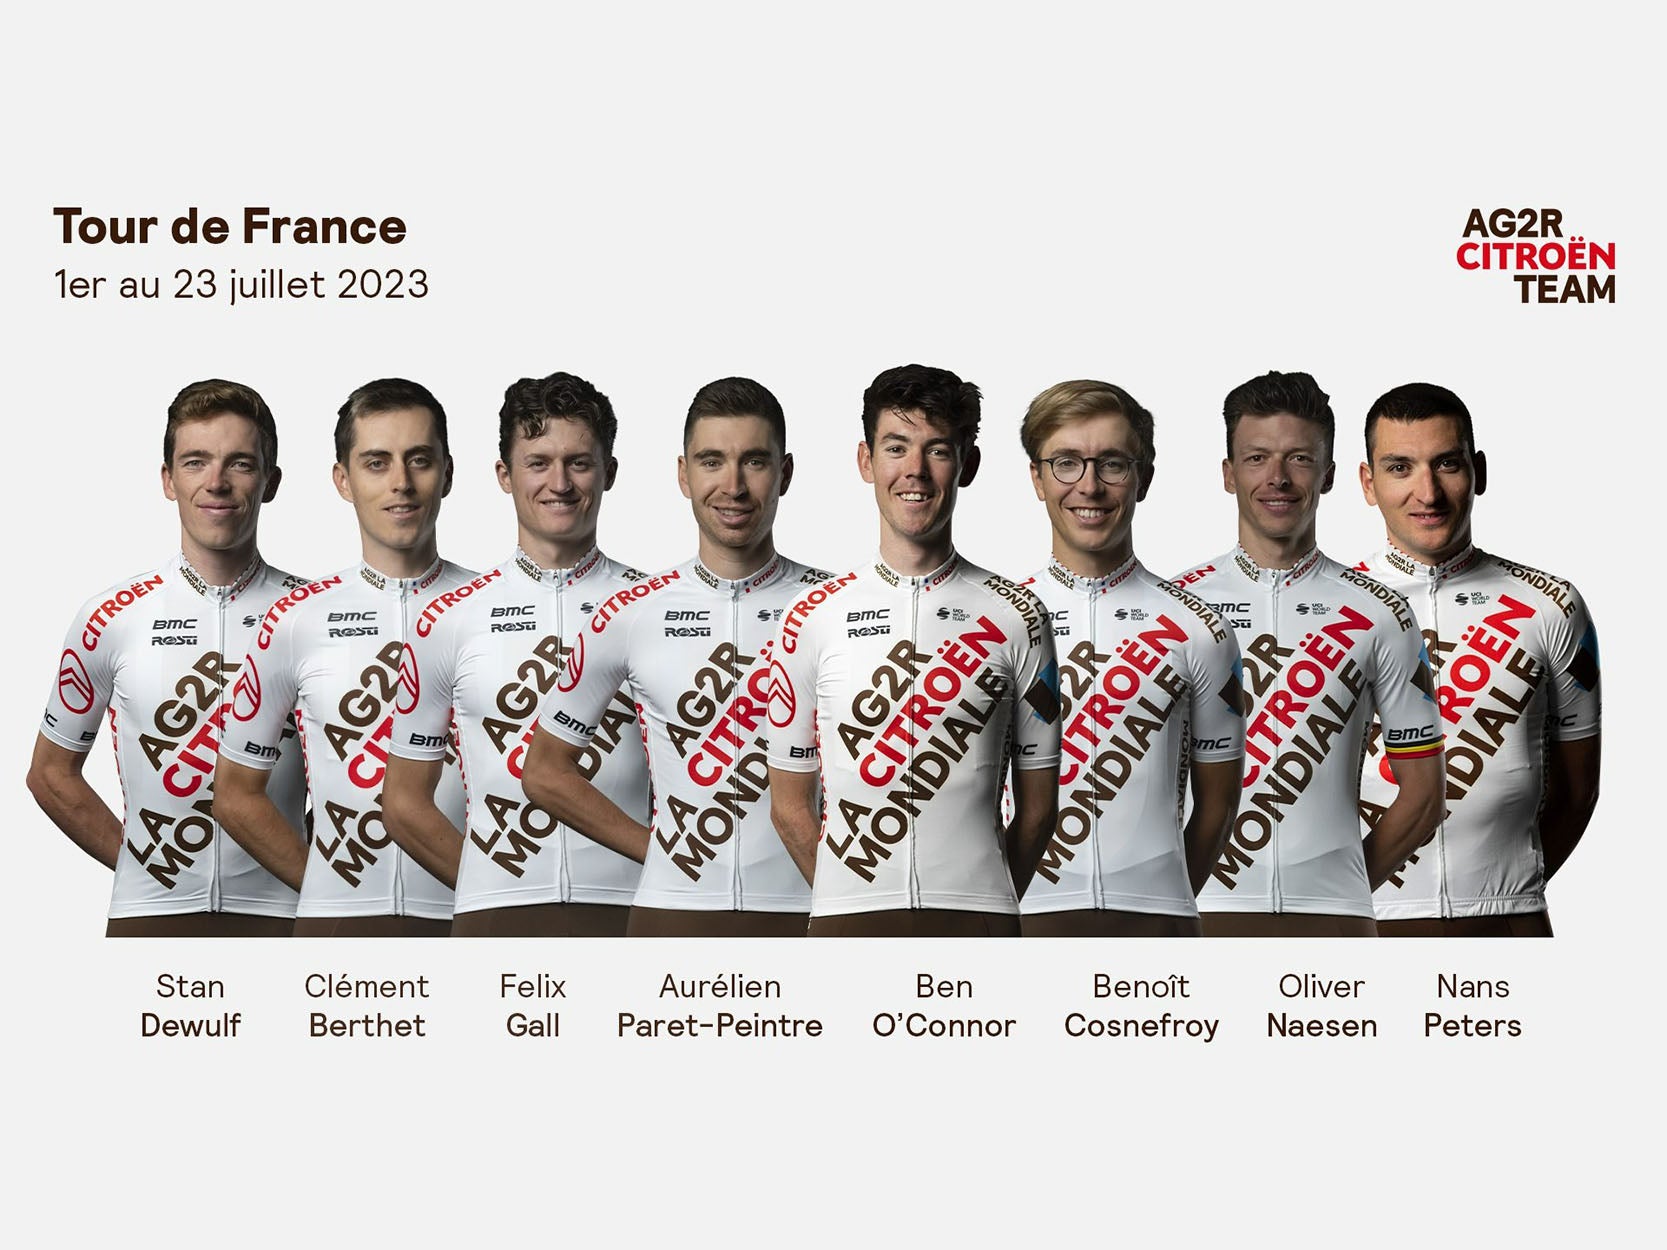 Meet the Tour de France 2023 Team